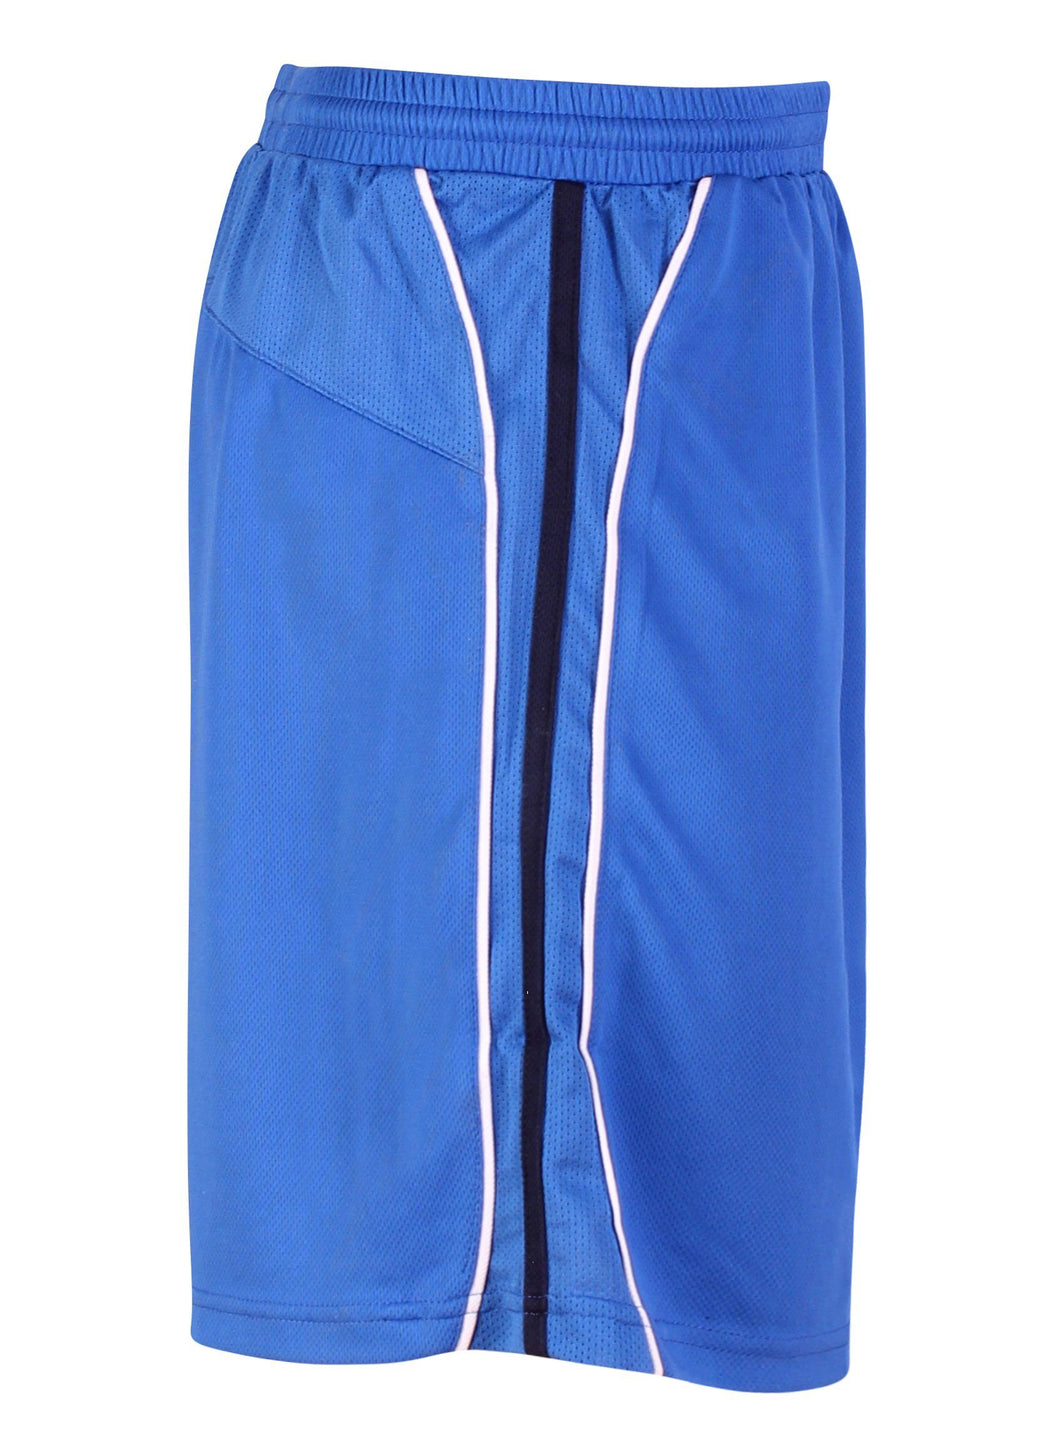 Teamstar Shorts Gazelle Sports UK Yes XS Col A) Royal Blue/ Navy/ White